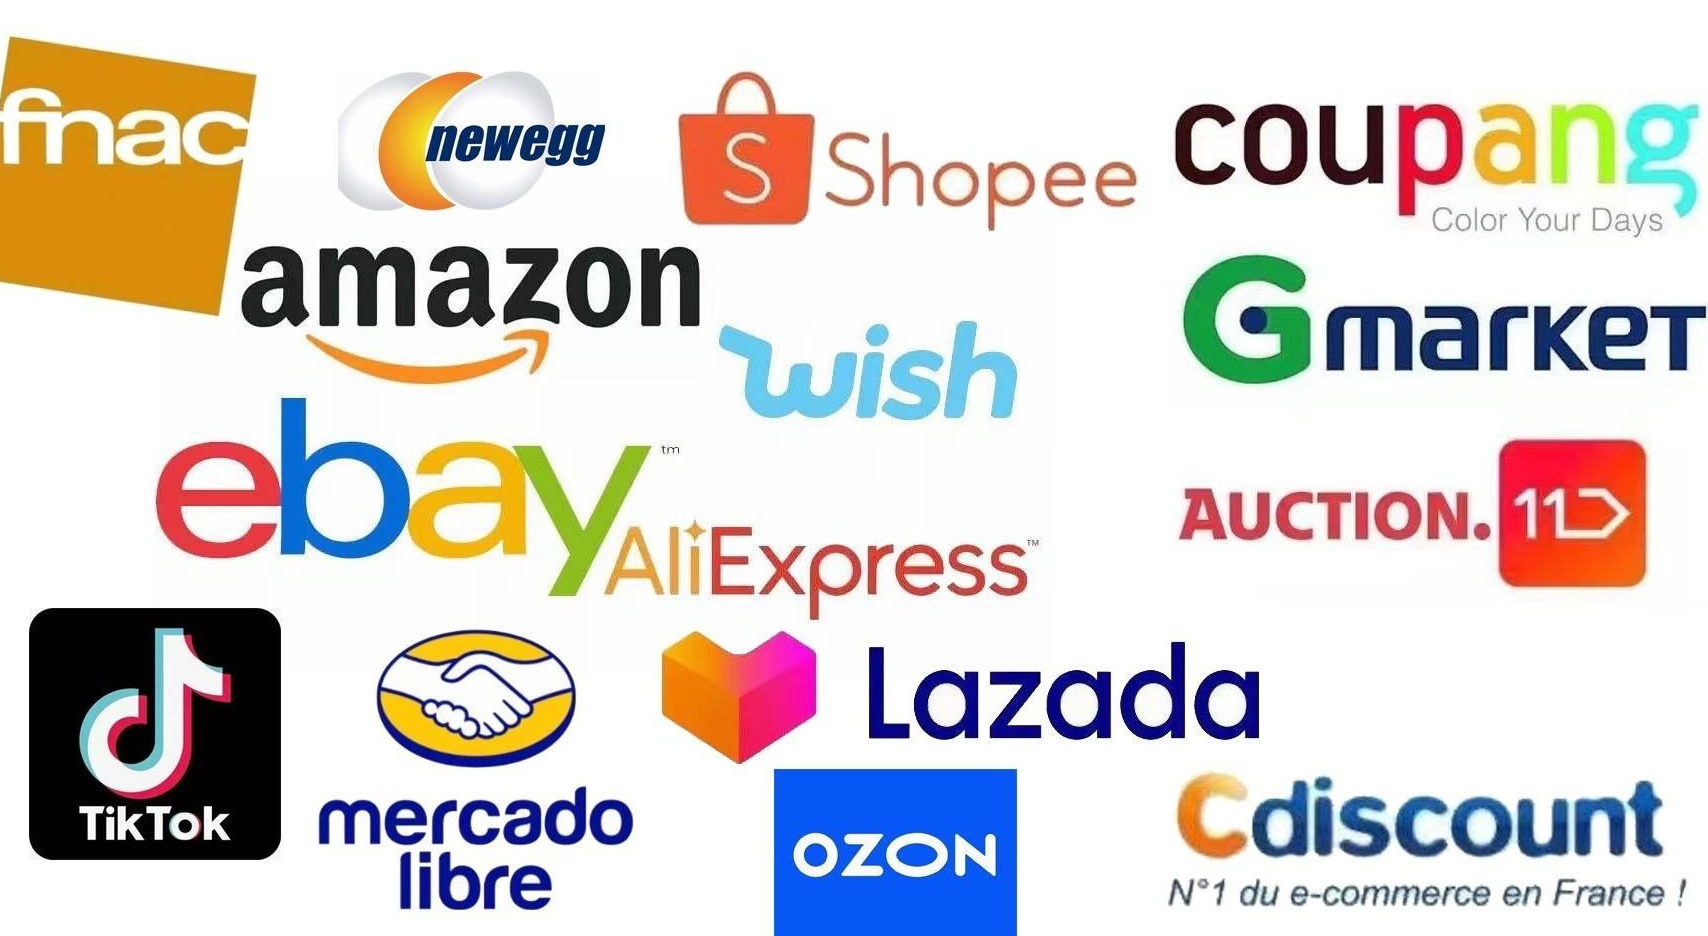 跨境平台五虎对比：Amazon、eBay、Wish、Target、Newegg，谁更厉害？